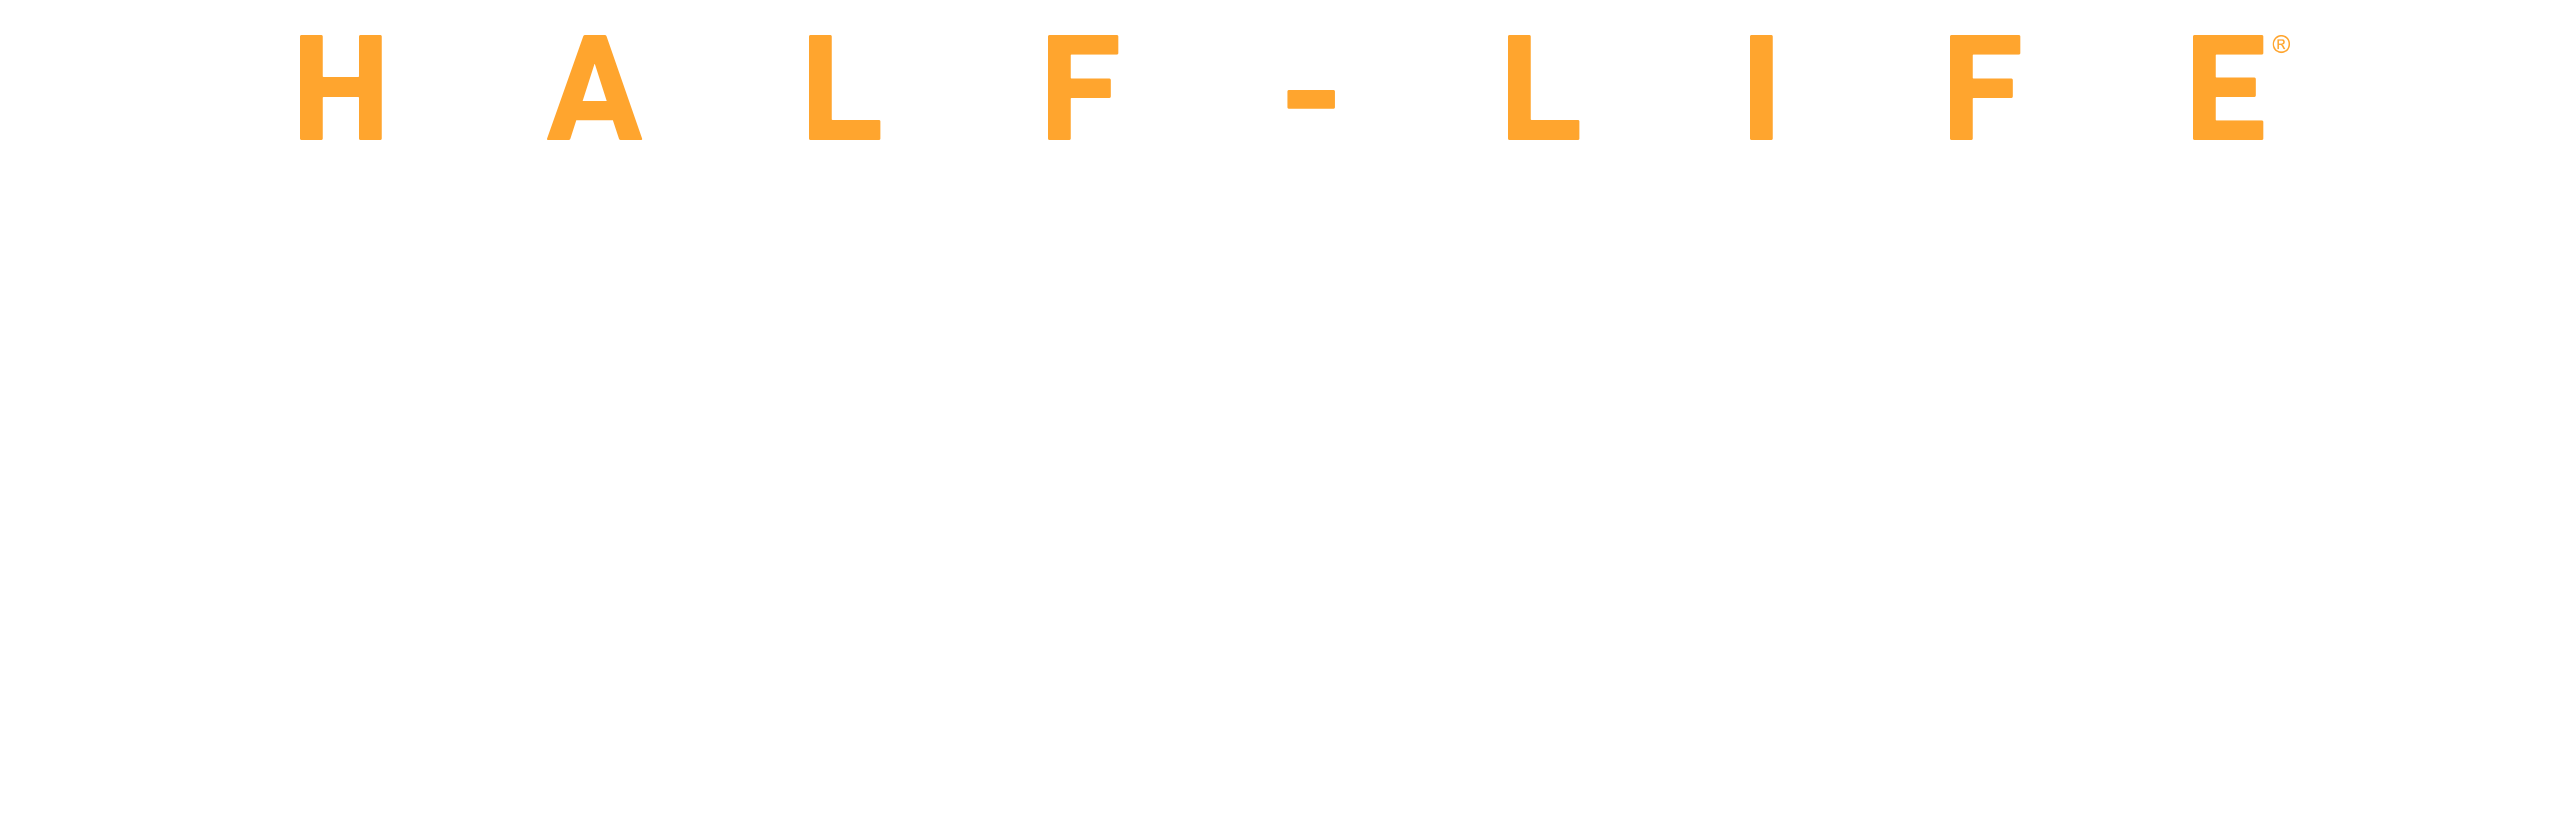 Half-Life-Alyx-full-game-cracked